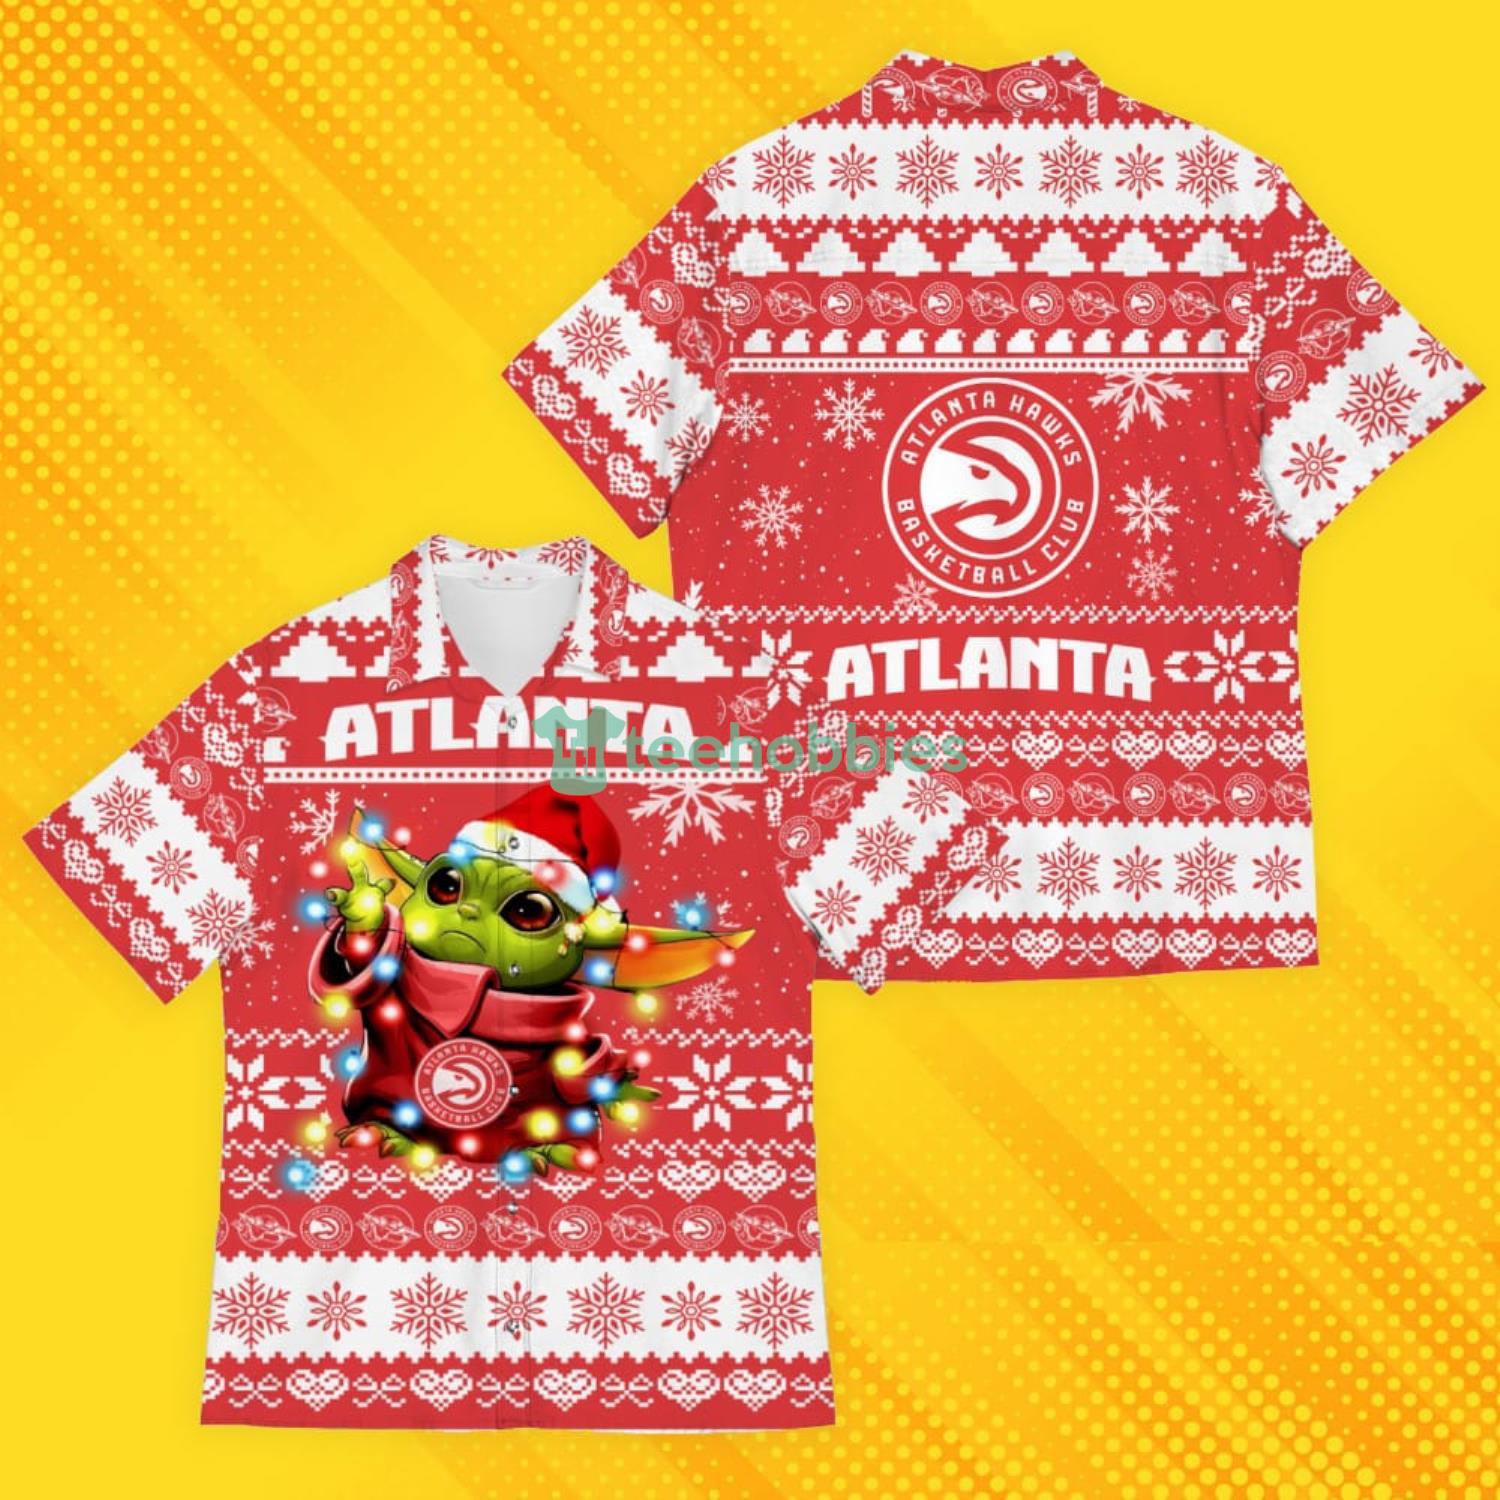 Memphis Grizzlies Baby Yoda Star Wars American Ugly Christmas Sweater  Pattern Hawaiian Shirt - Banantees